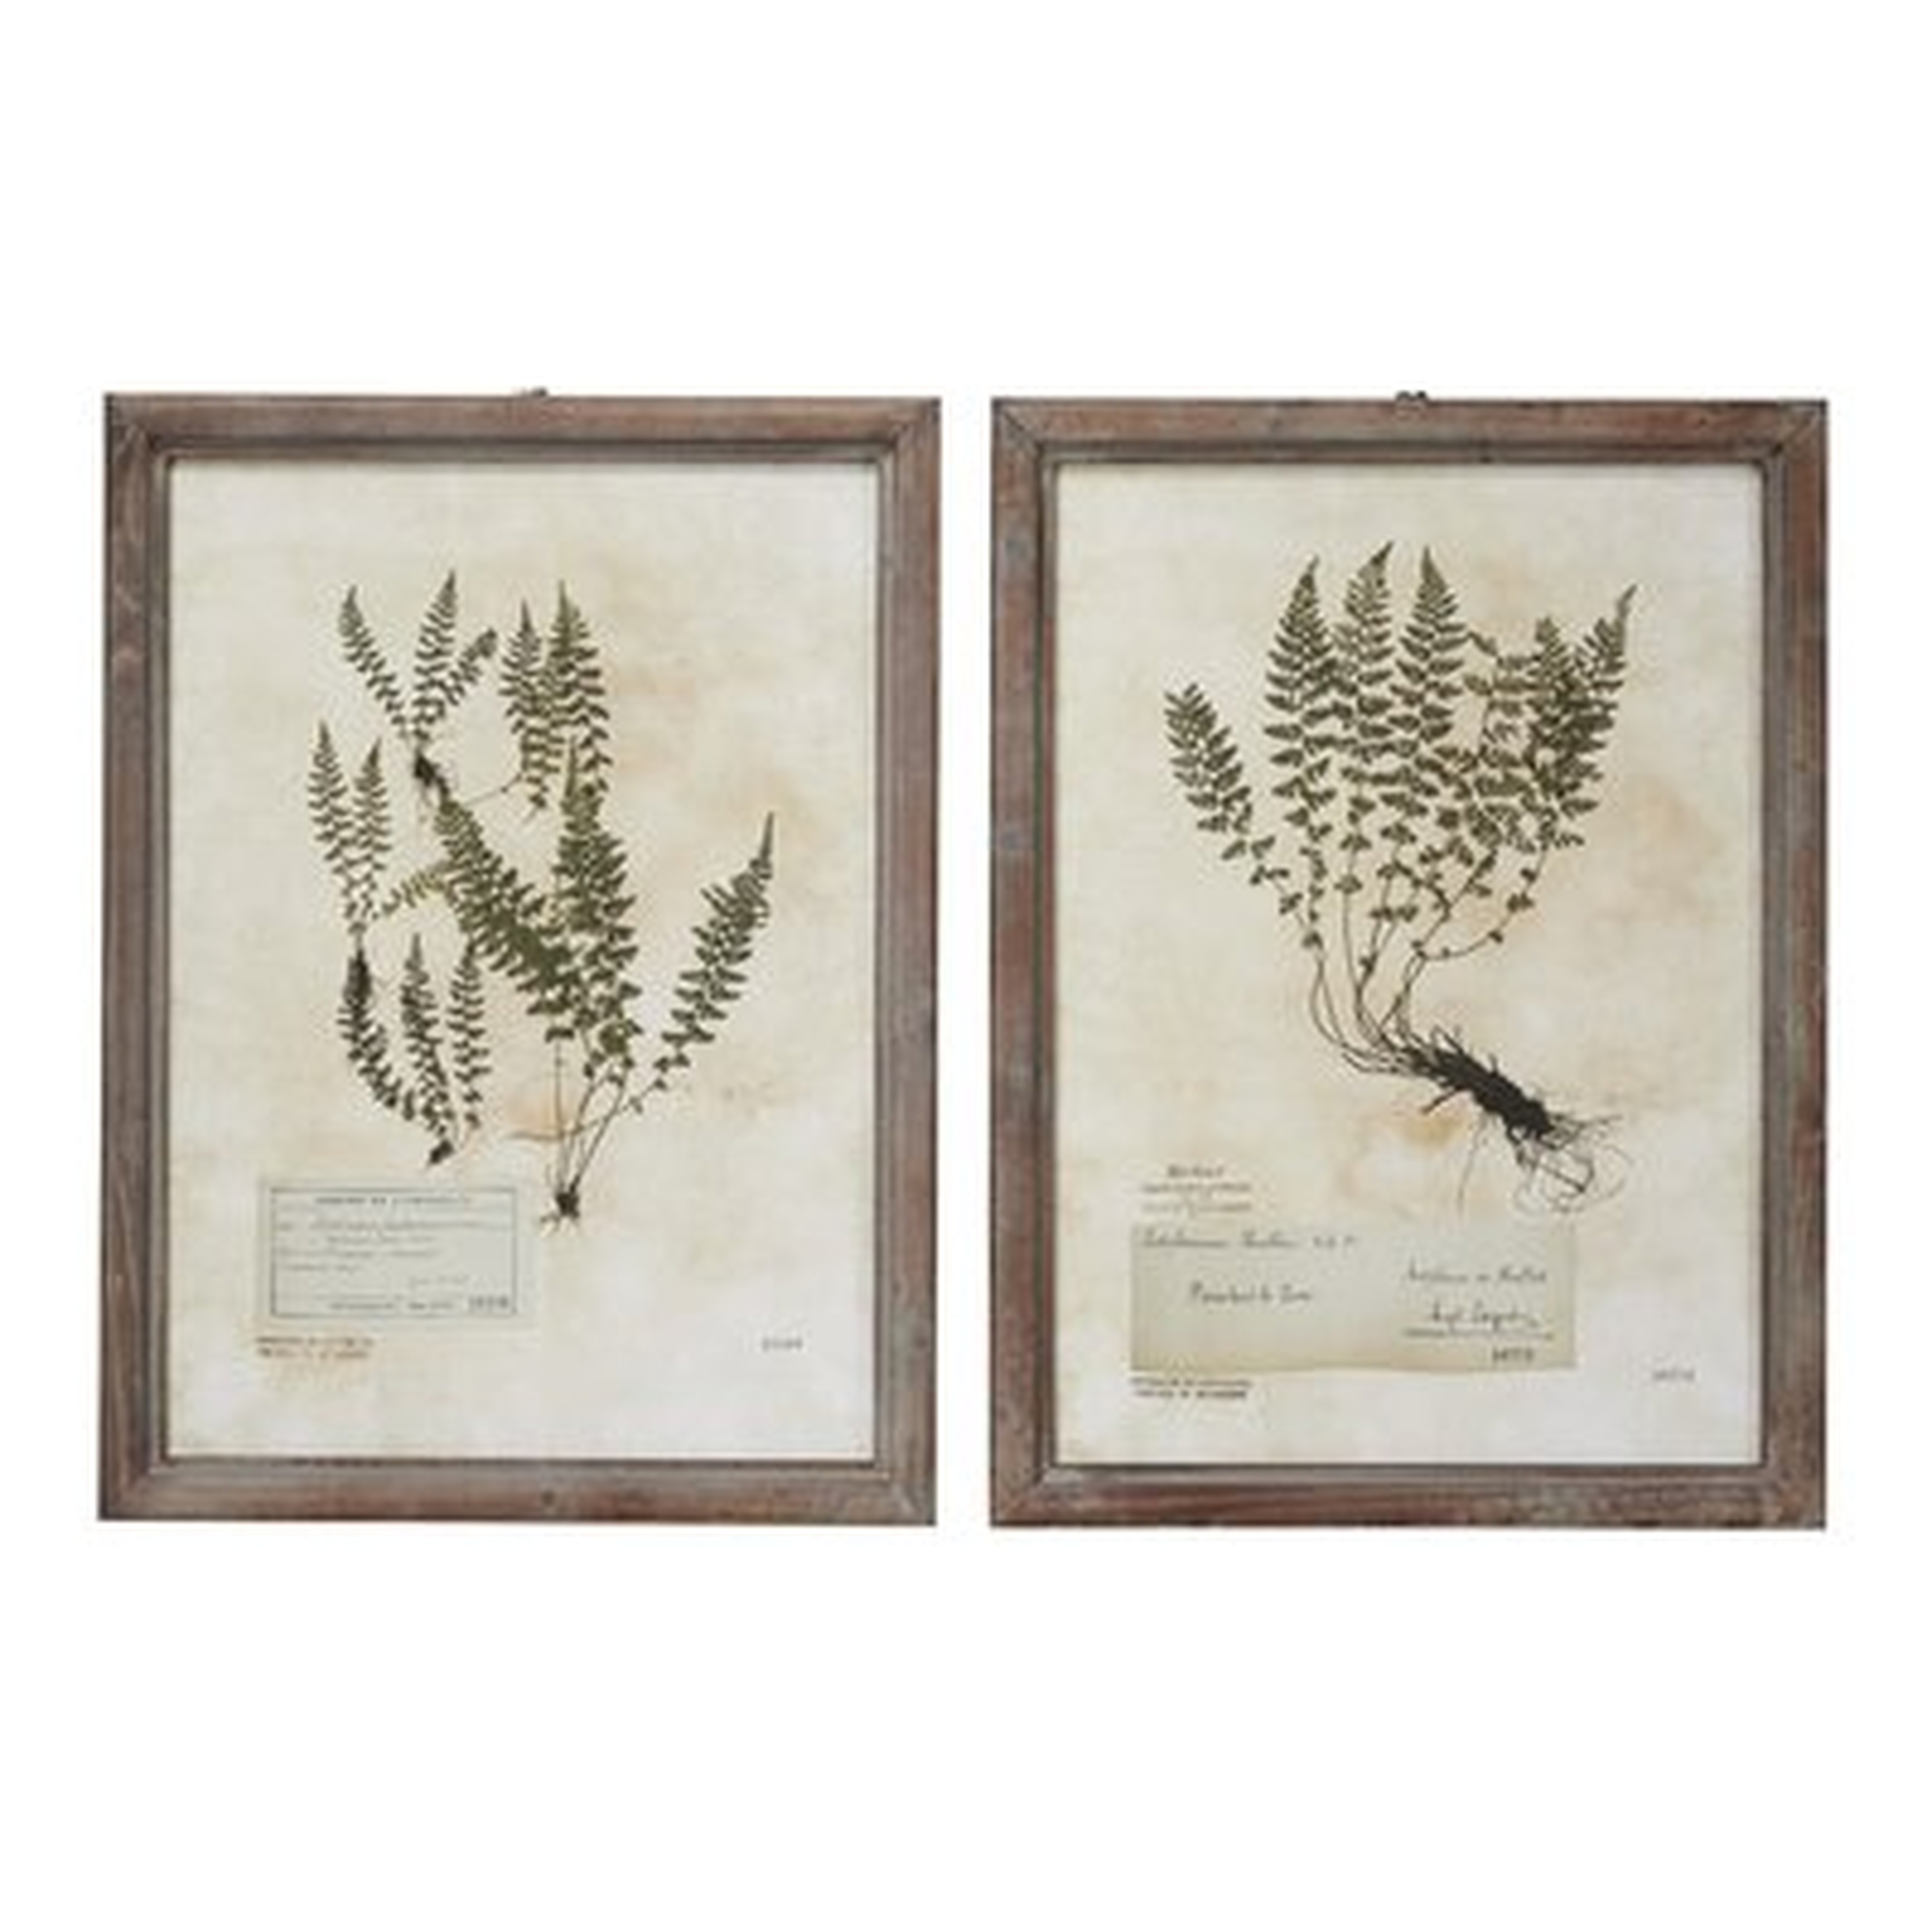 Large, Rectangular French Vintage Botanical Prints In Natural Wood Frames, Set Of 2: 20.5" X 27.5" Each - Picture Frame Drawing Print Set on Wood - Wayfair